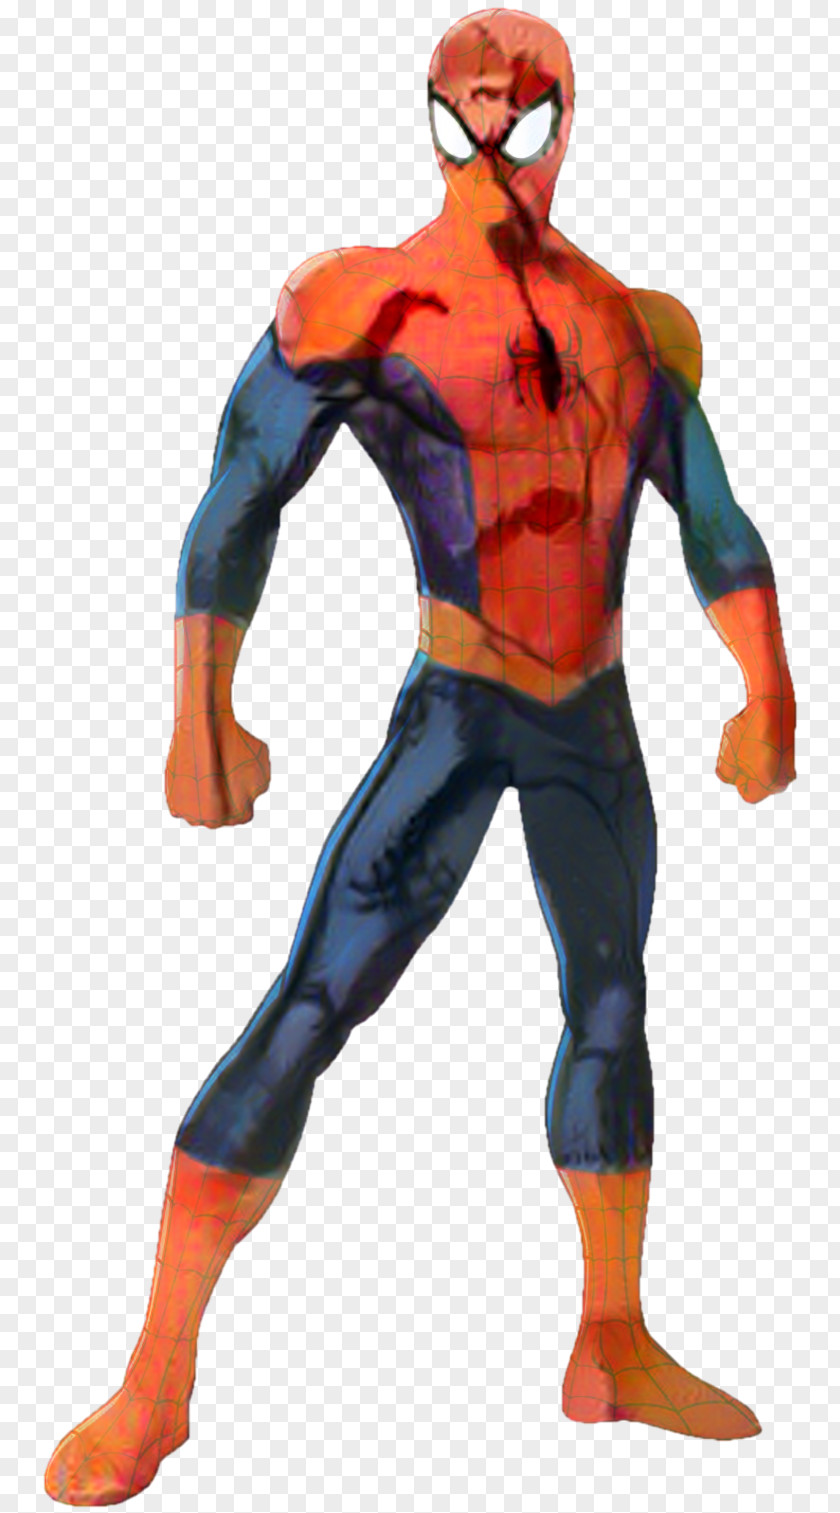 Spider-Man Superhero Video Games Film PNG